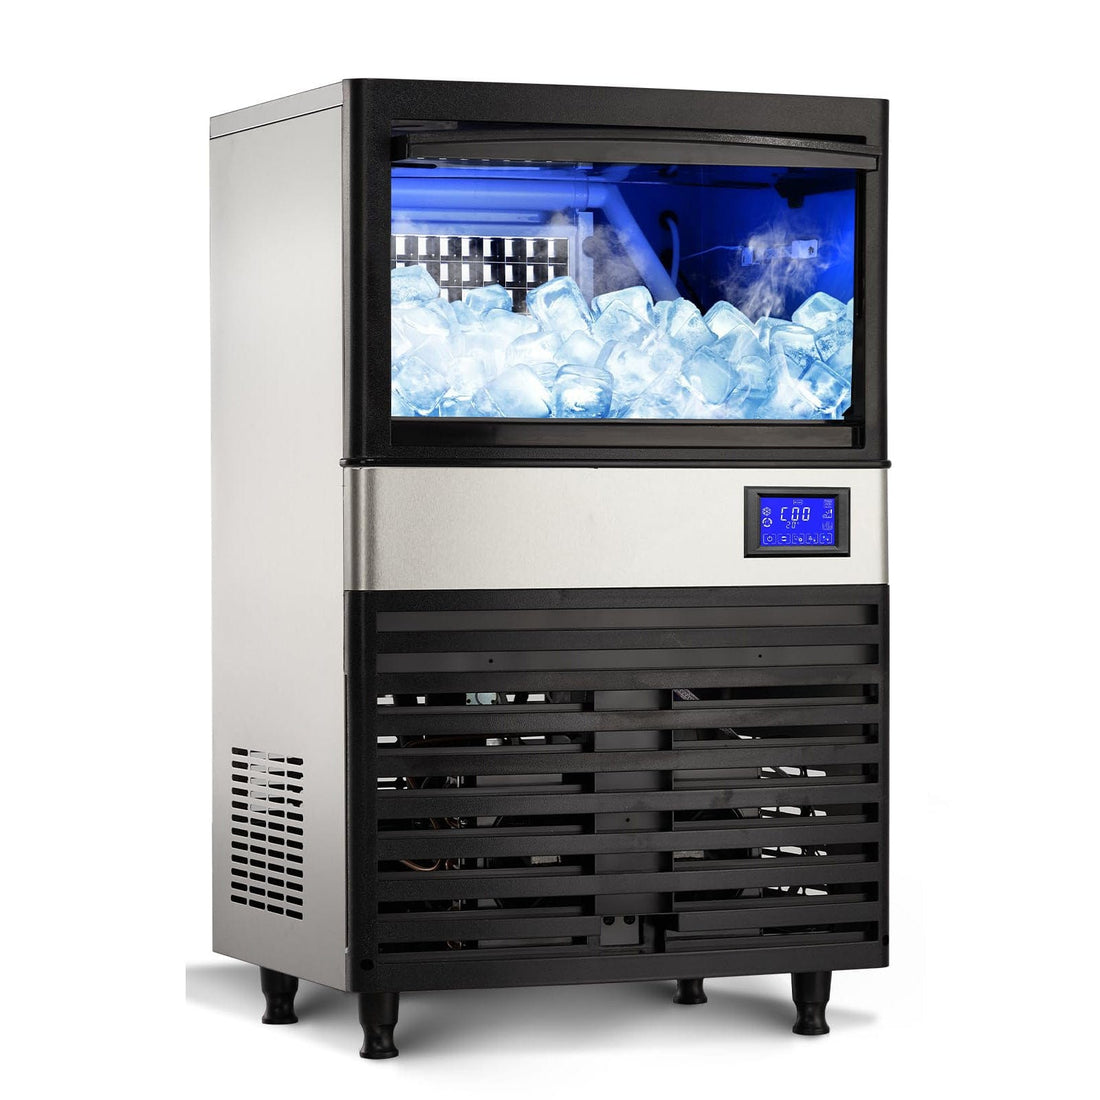 Ice Maker 110Lbs/24H & 27Lbs Bin, Scoop, Self-Clean, LCD, Drain Pump for Bars